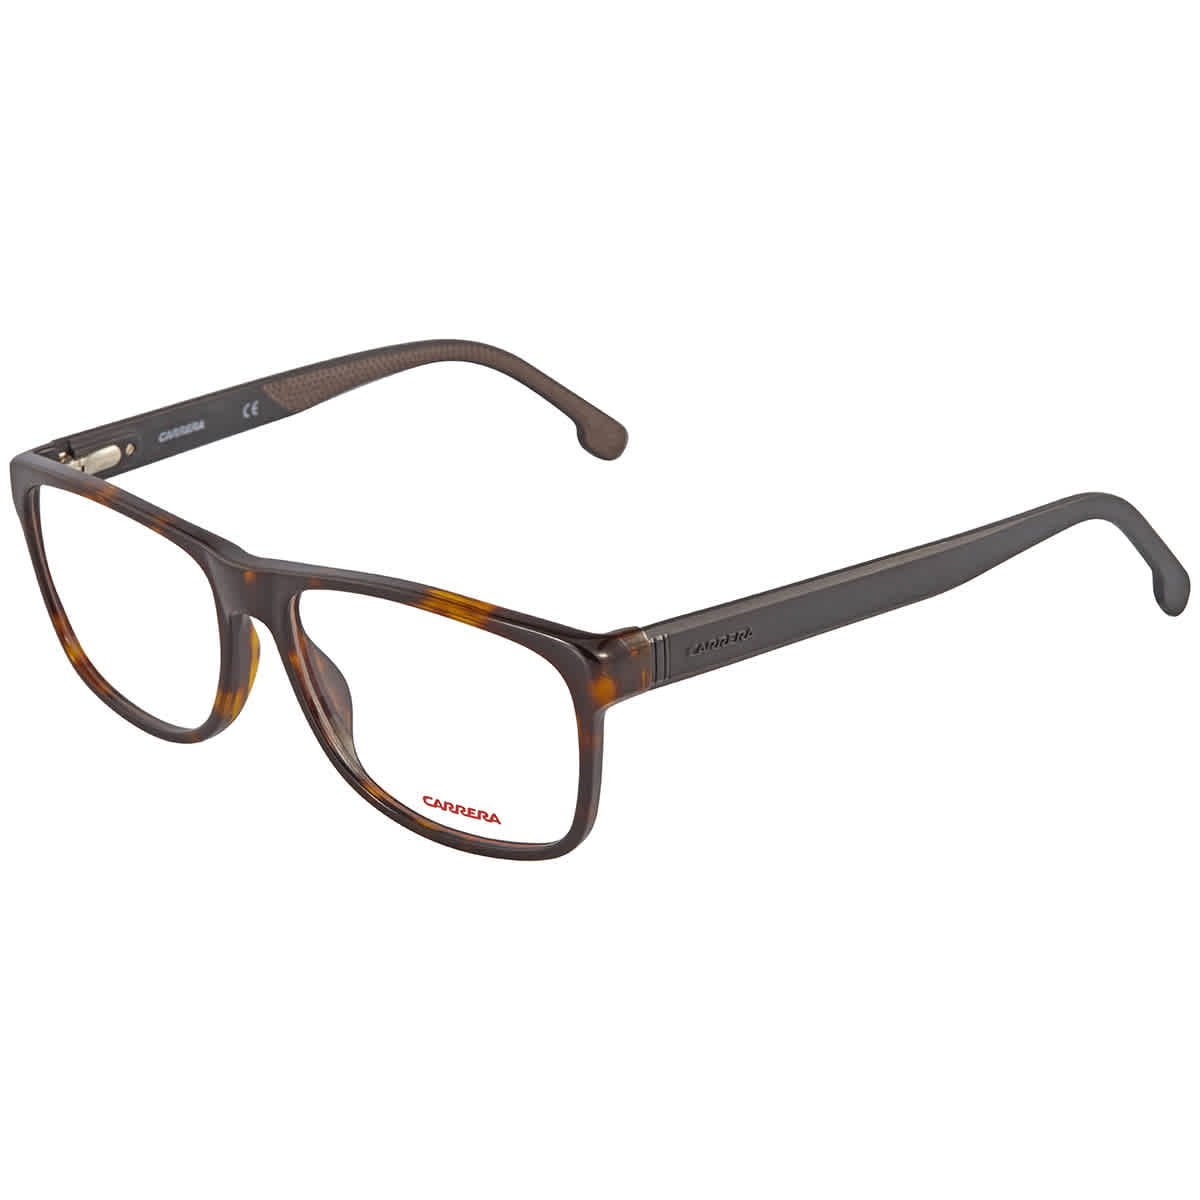 Carrera Demo Rectangular Men's Eyeglasses CA8851 0086 56 - Walmart.com